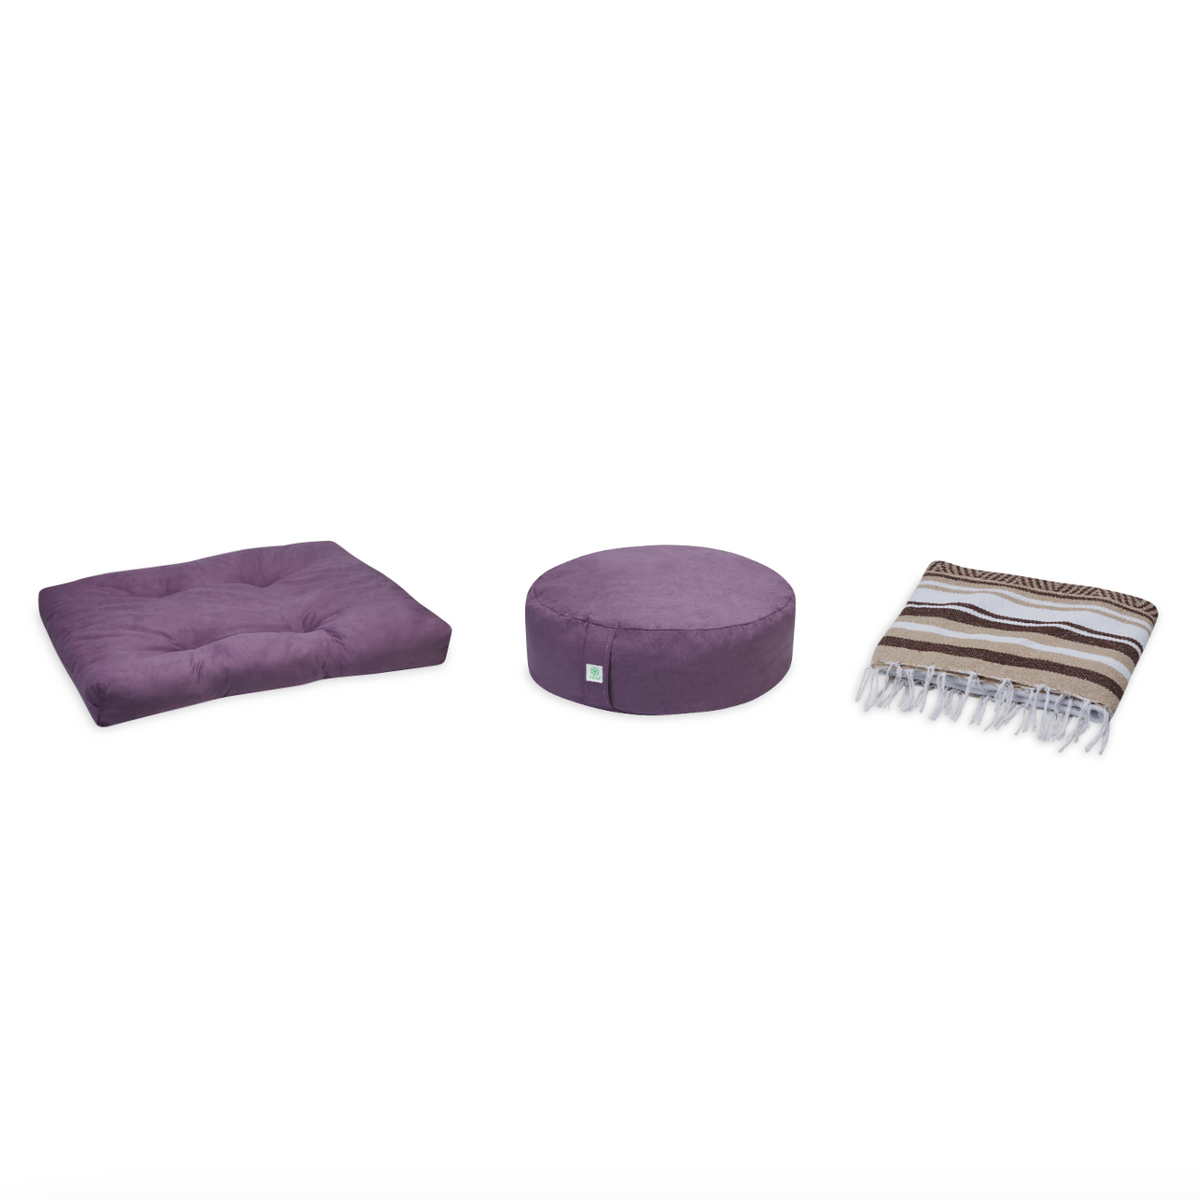 Meditation Bundle - Zabuton (Purple), Zafu (Purple), Blanket (Tan/Brown)